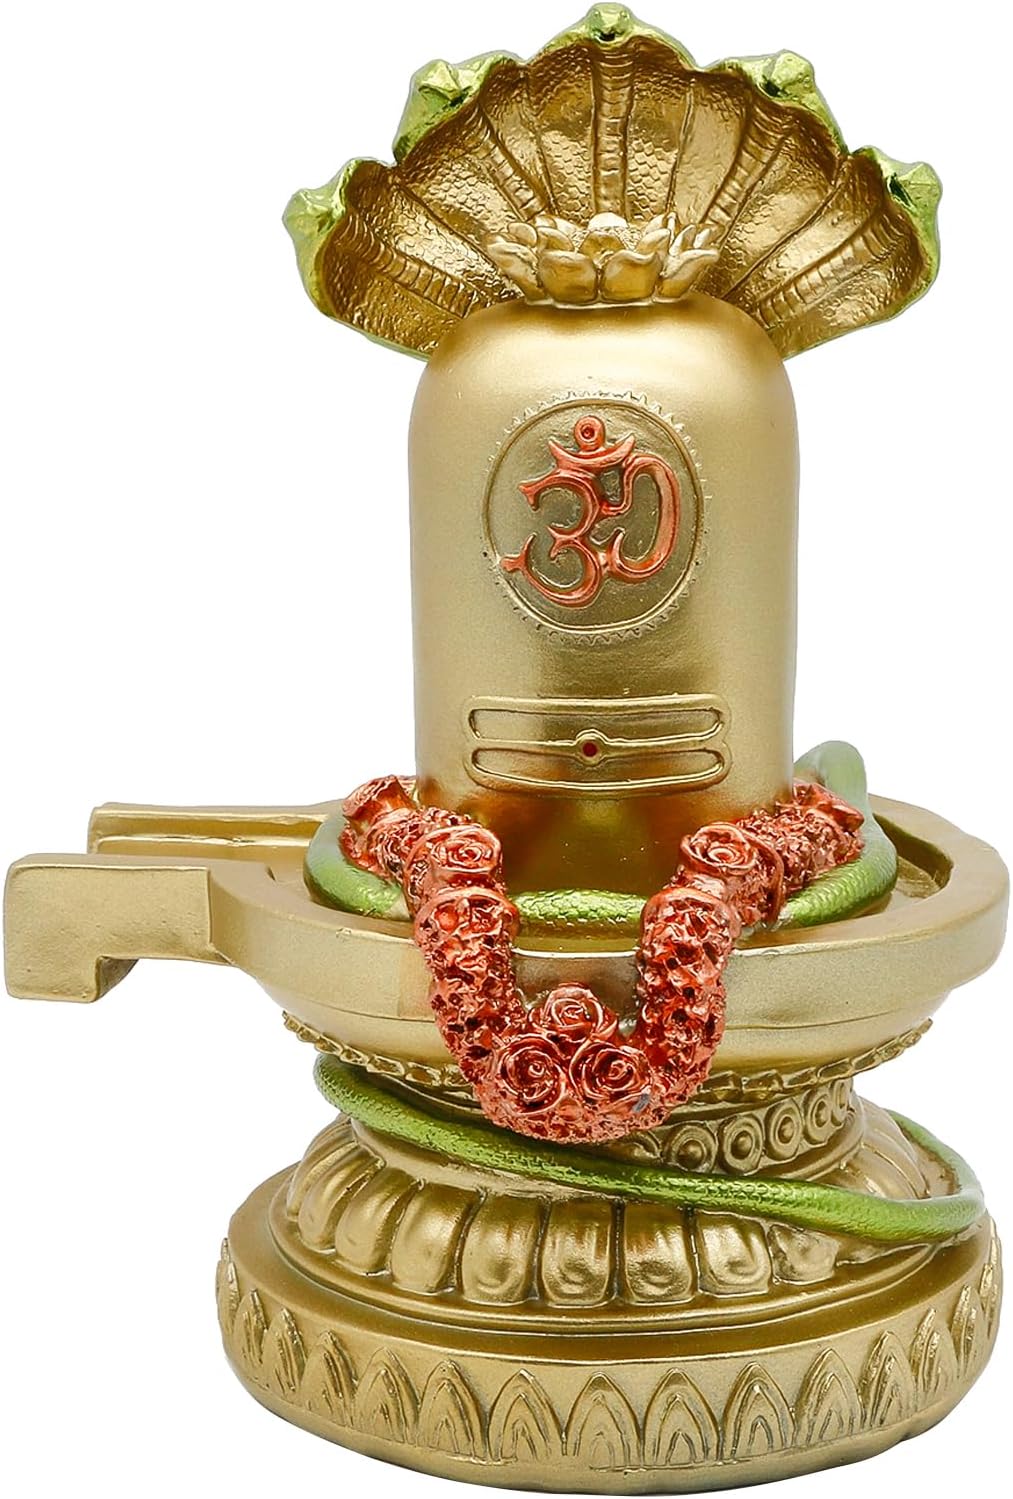 Hindu God Shiva Lingam Statue - India Home Temple Mandir Murti Lord Idol Indian Temple Pooja Item Puja Religious Sculpture Diwali Gifts